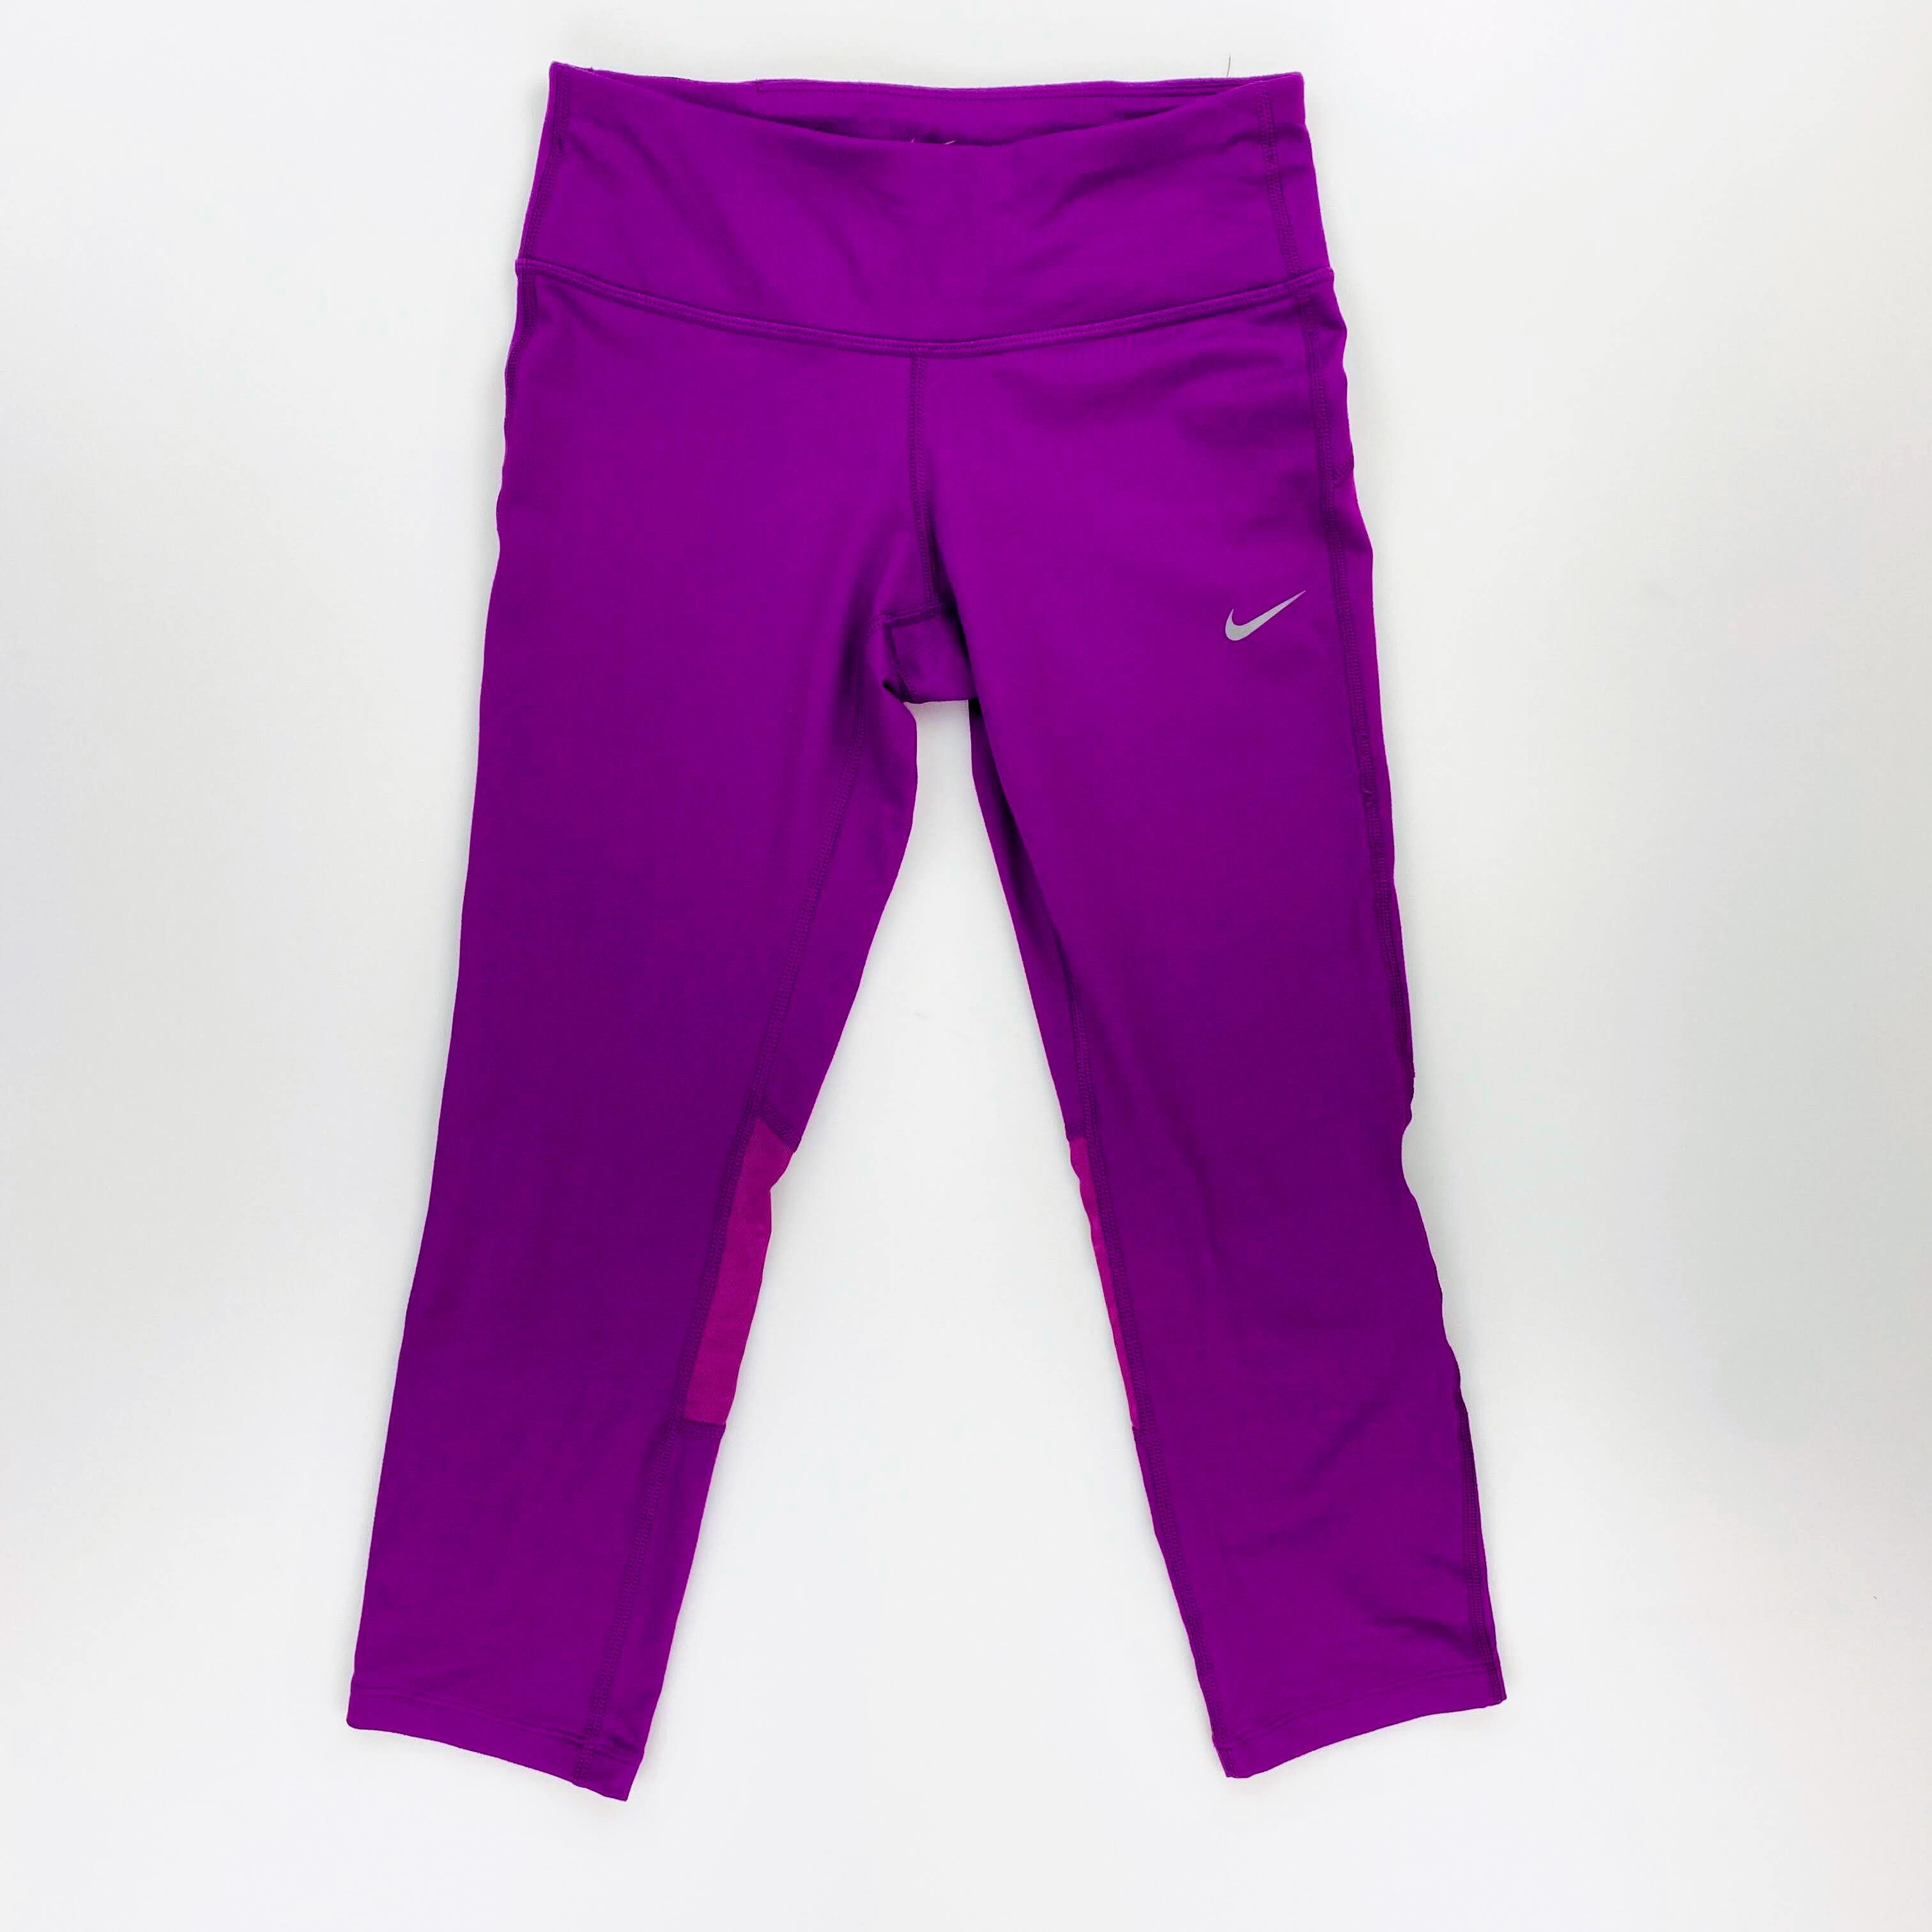 Nike Pantaloni da corsa - Donna di seconda mano - Viola - XS | Hardloop